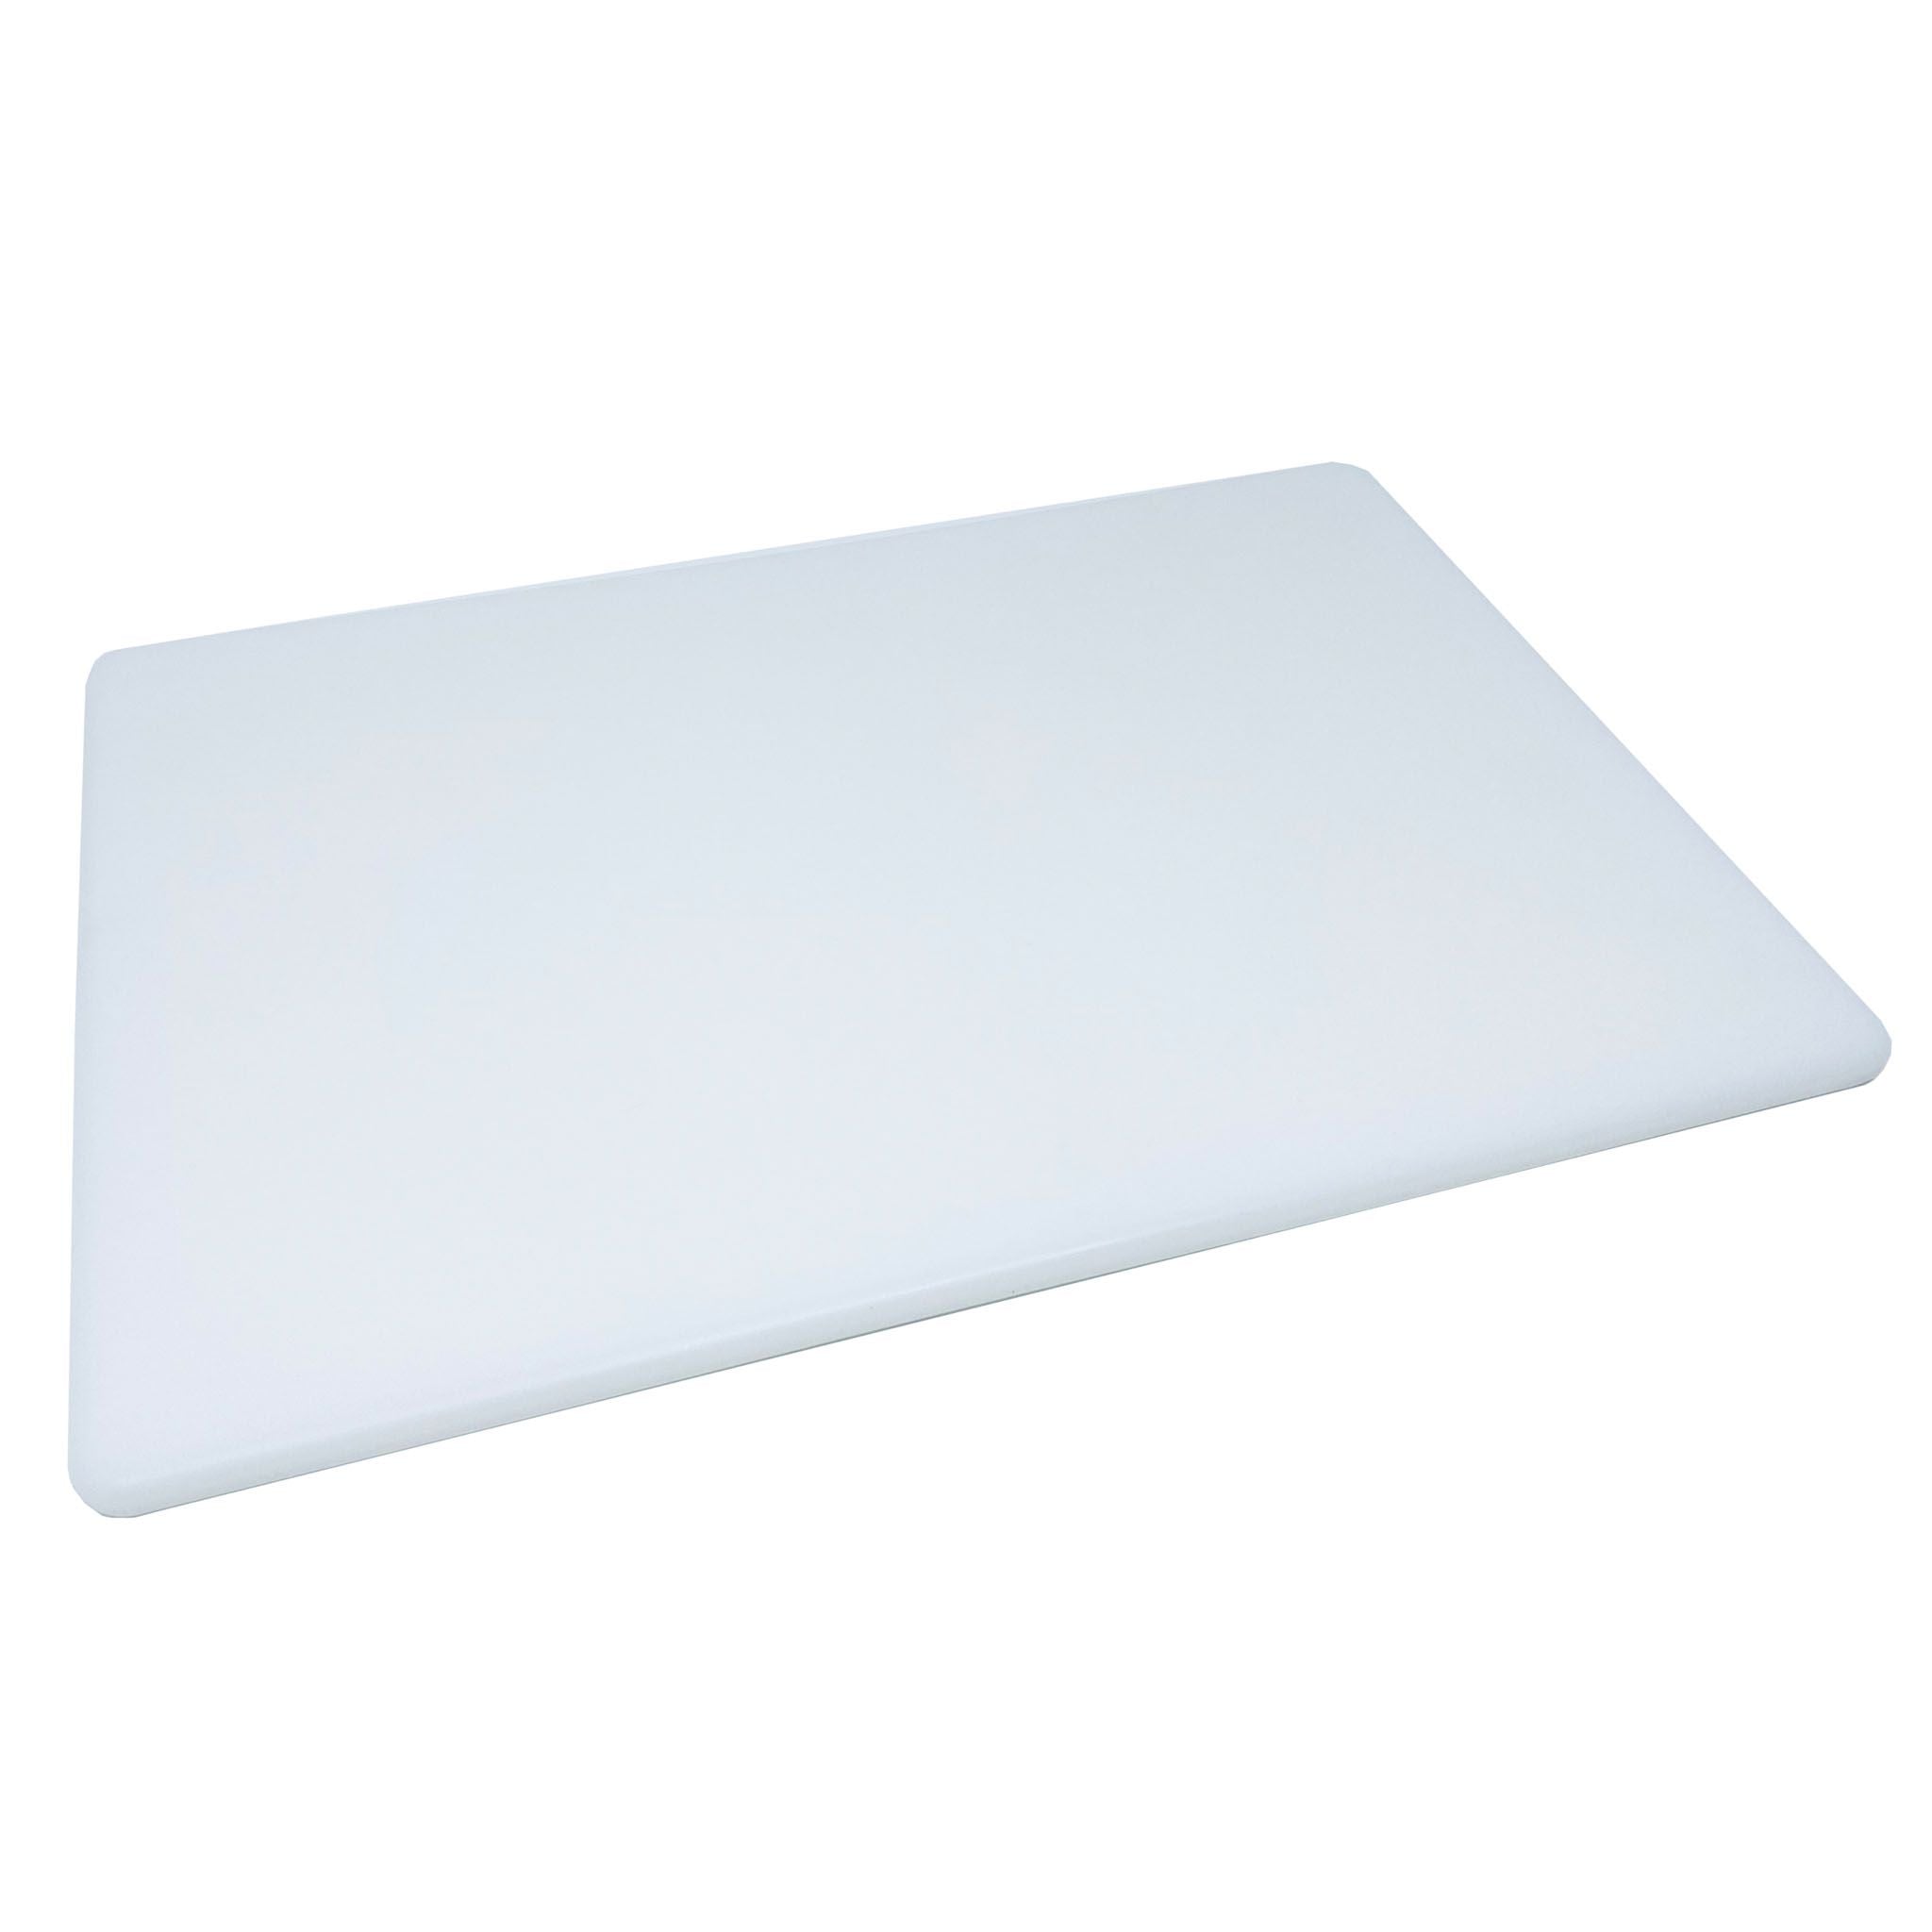 HDPE Plastic Sheet/Plate Natural Food Grade Cutting Board